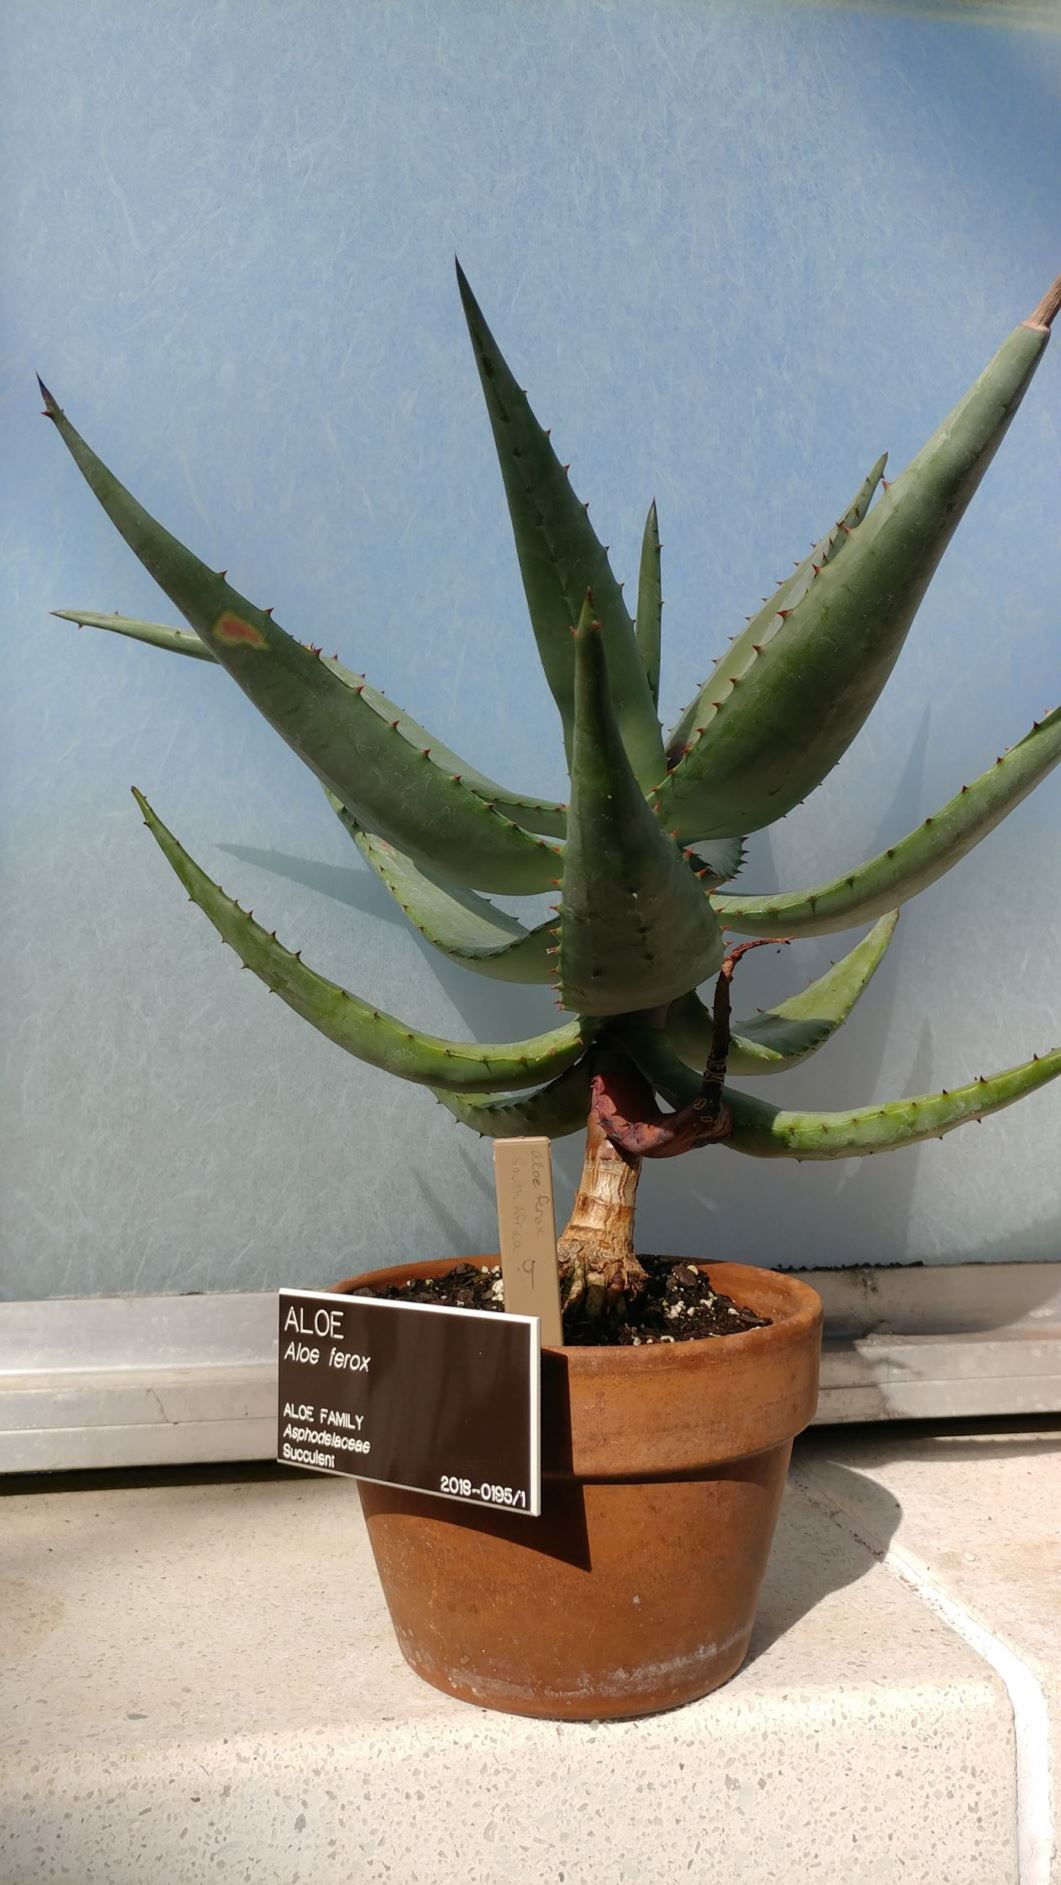 Aloe ferox - aloe